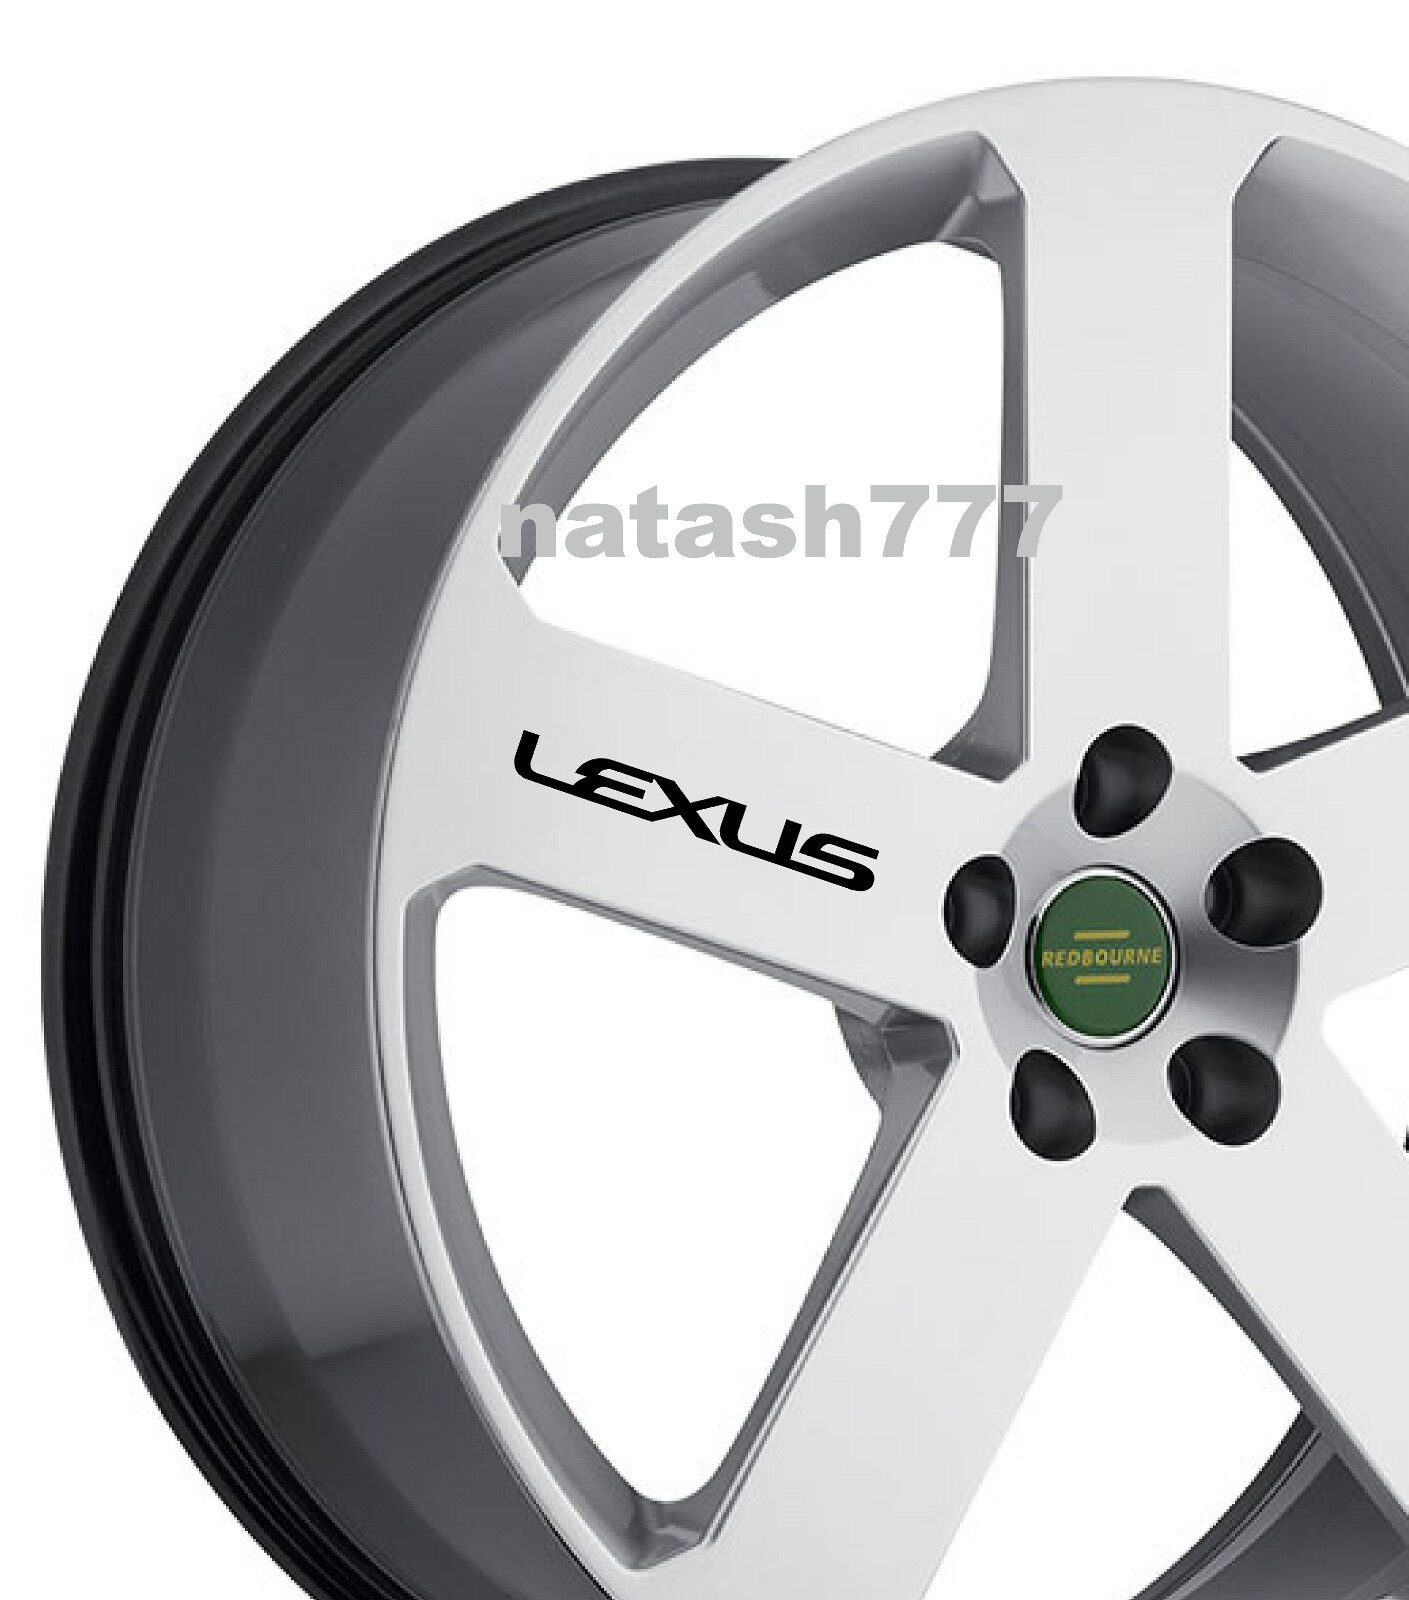 4 - LEXUS Sport Racing Decal sticker emblem logo wheels rims BLACK